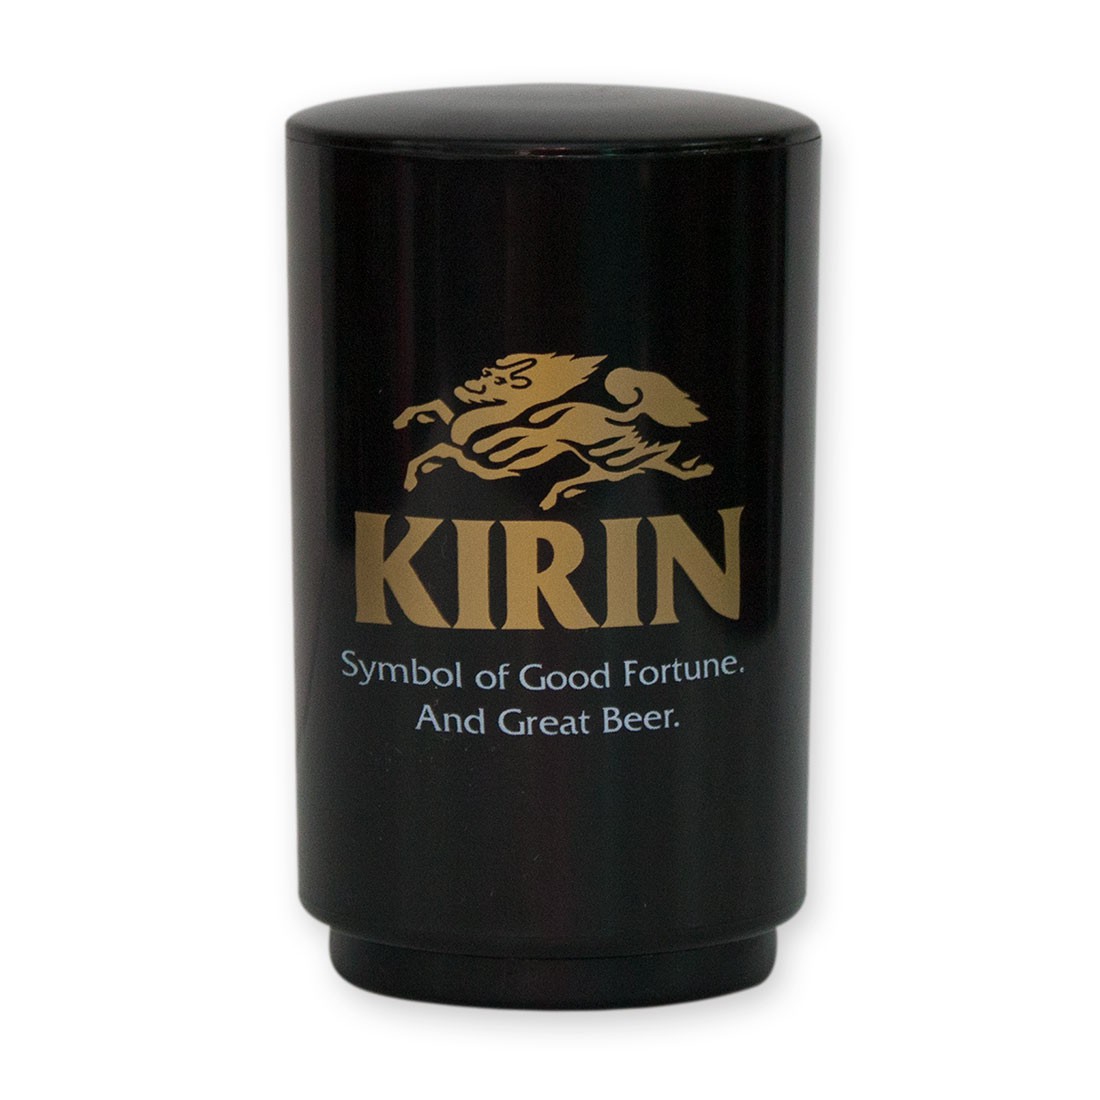 Picture of Kirin 24641 Kirin Beer Company Push-Down Bottle Opener